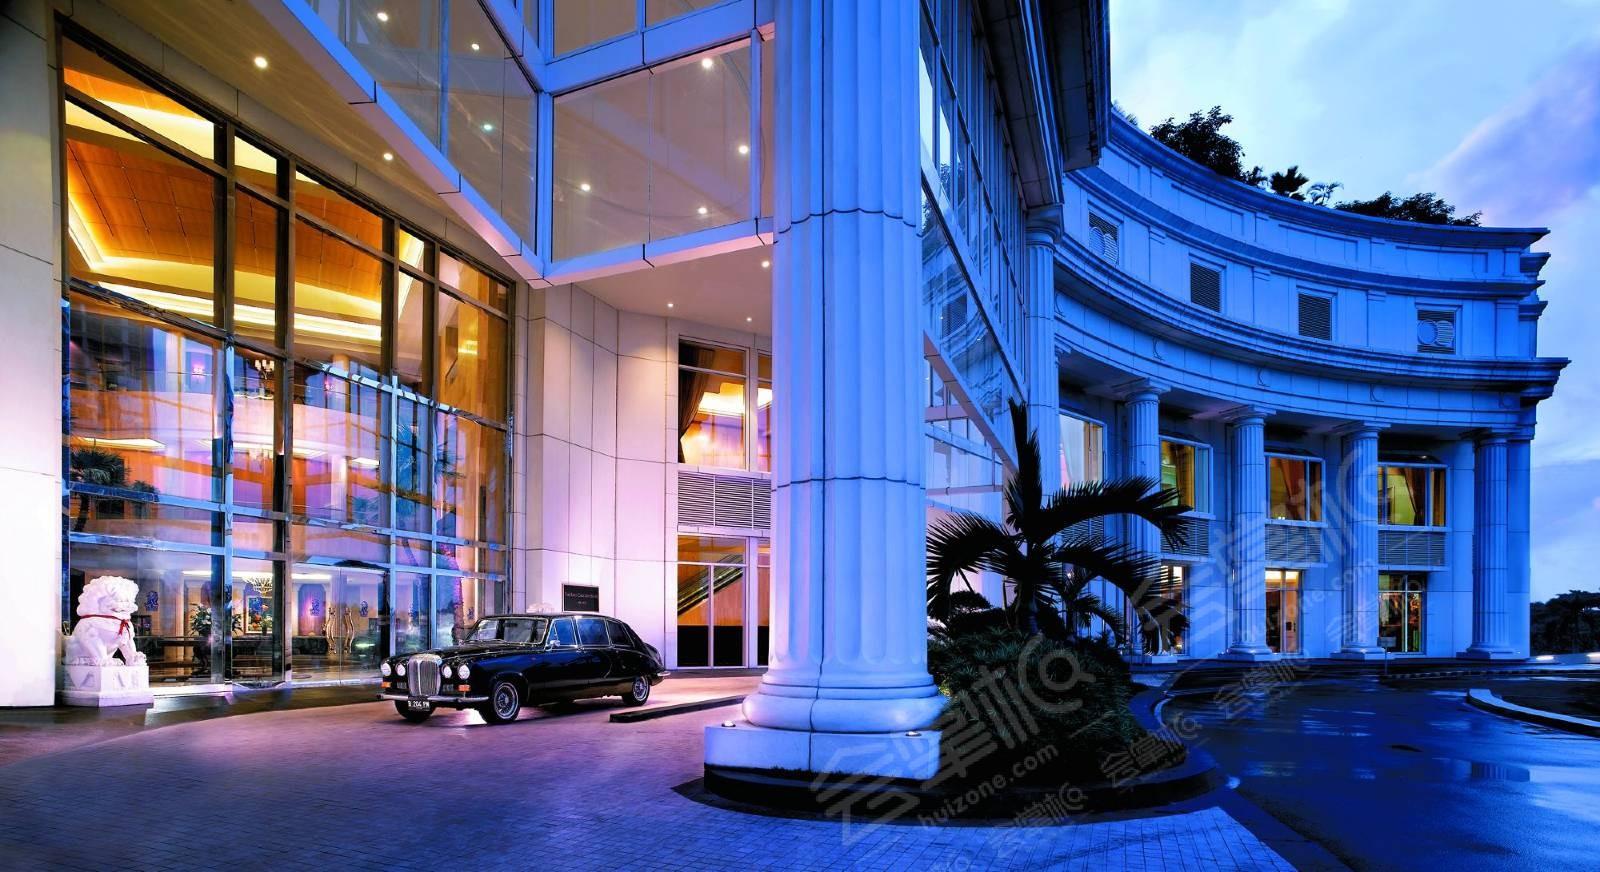 雅加达麦卡库宁冈丽思卡尔顿酒店 The Ritz-Carlton Jakarta, Mega Kuningan